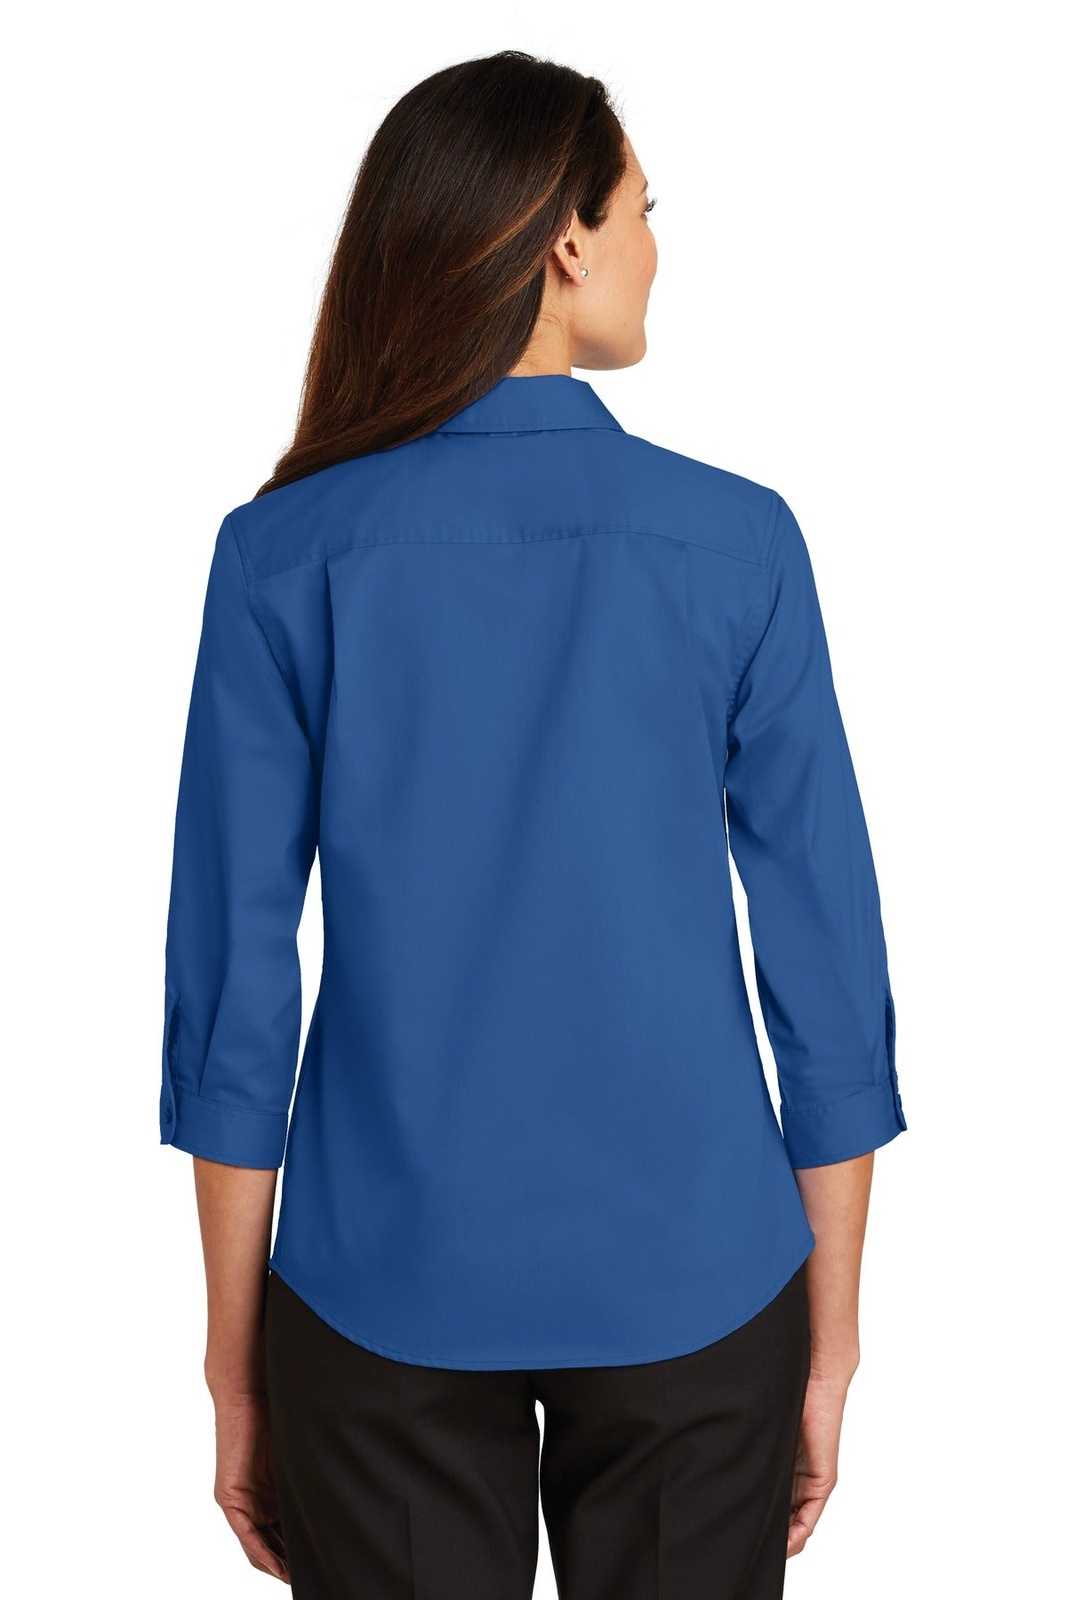 Port Authority L665 Ladies 3/4-Sleeve Superpro Twill Shirt - True Blue - HIT a Double - 2